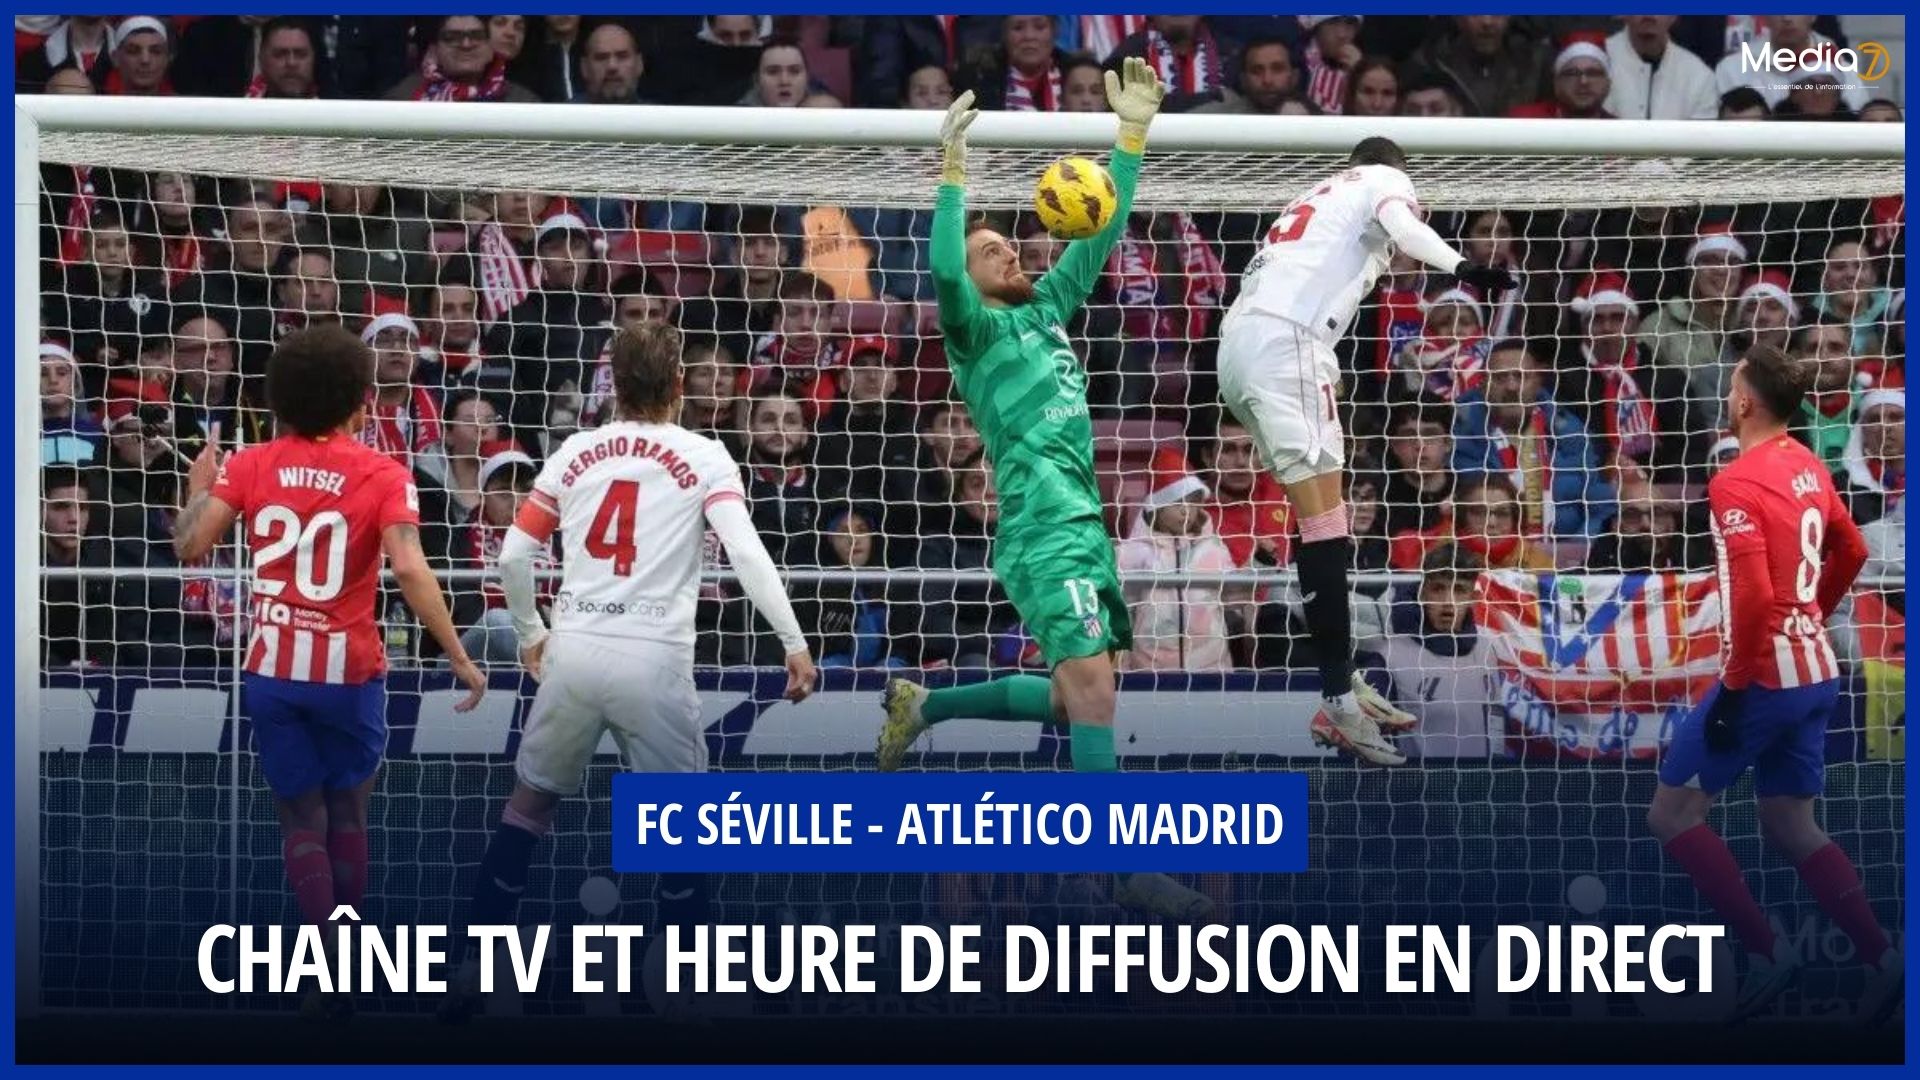 Sevilla FC - Atlético Madrid match live: TV channel and broadcast time - Media7